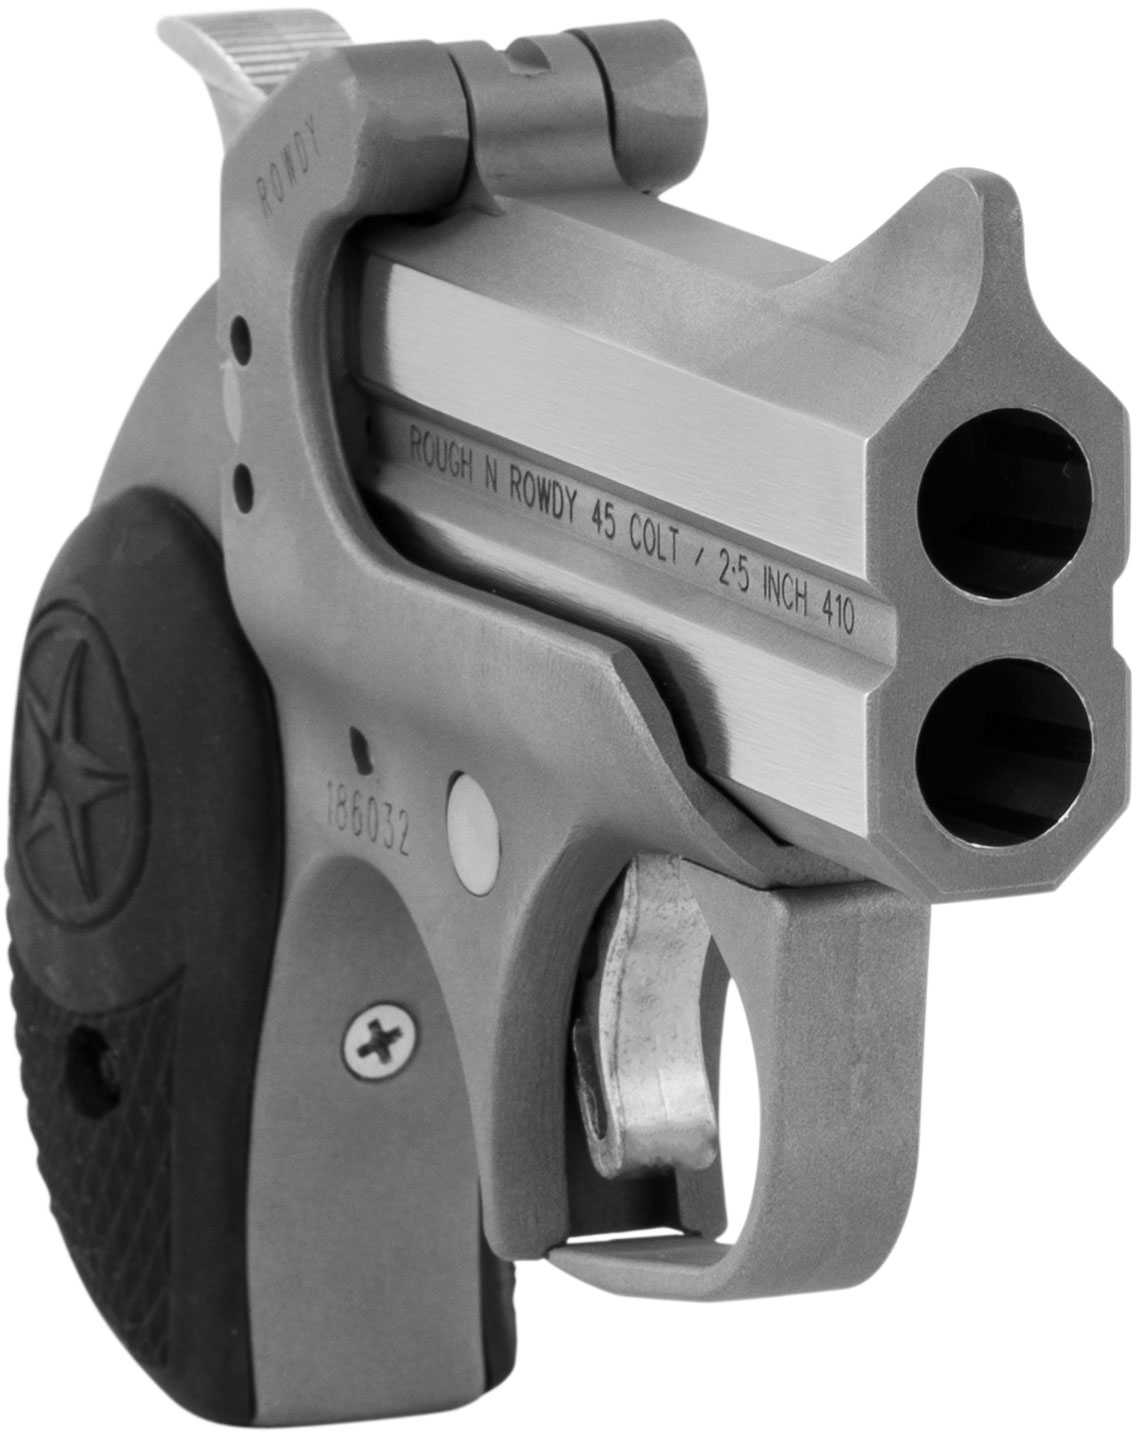 Bond Arms Rowdy 45 Colt / 410 Bore Derringer 3" Barrel Matte Stainless Steel Finish